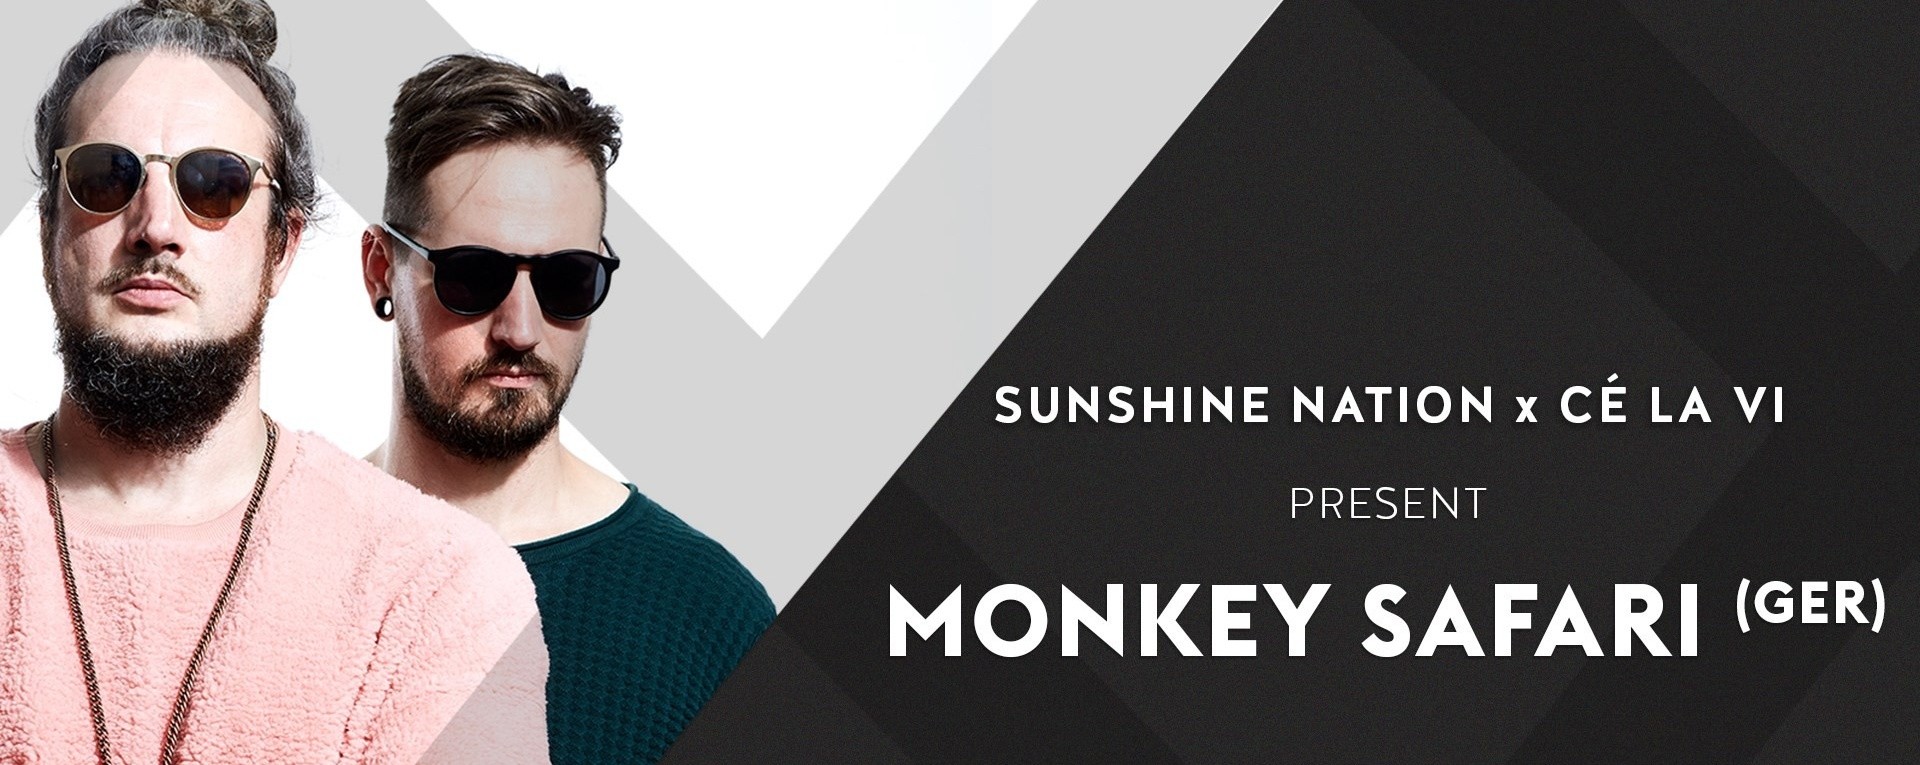 Sunshine Nation pres. Monkey Safari (GER)